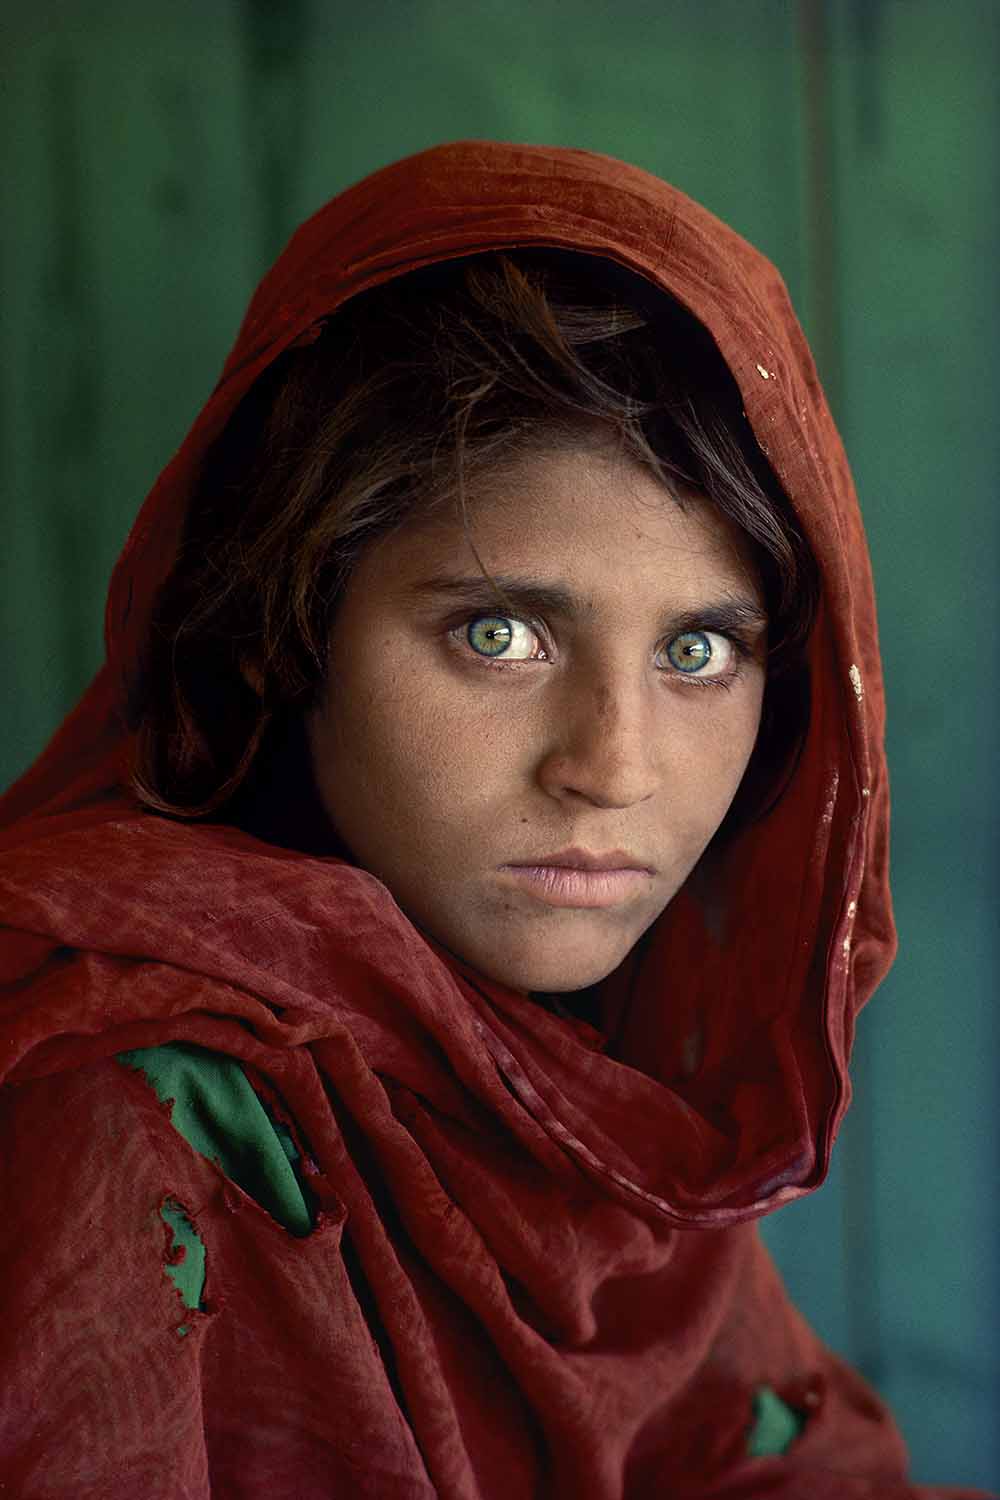 Steve McCurry, Afghan Girl (Sharbat Gula), 1984 digital chromogenic print ©Steve McCurry, courtesy Etherton Gallery 	